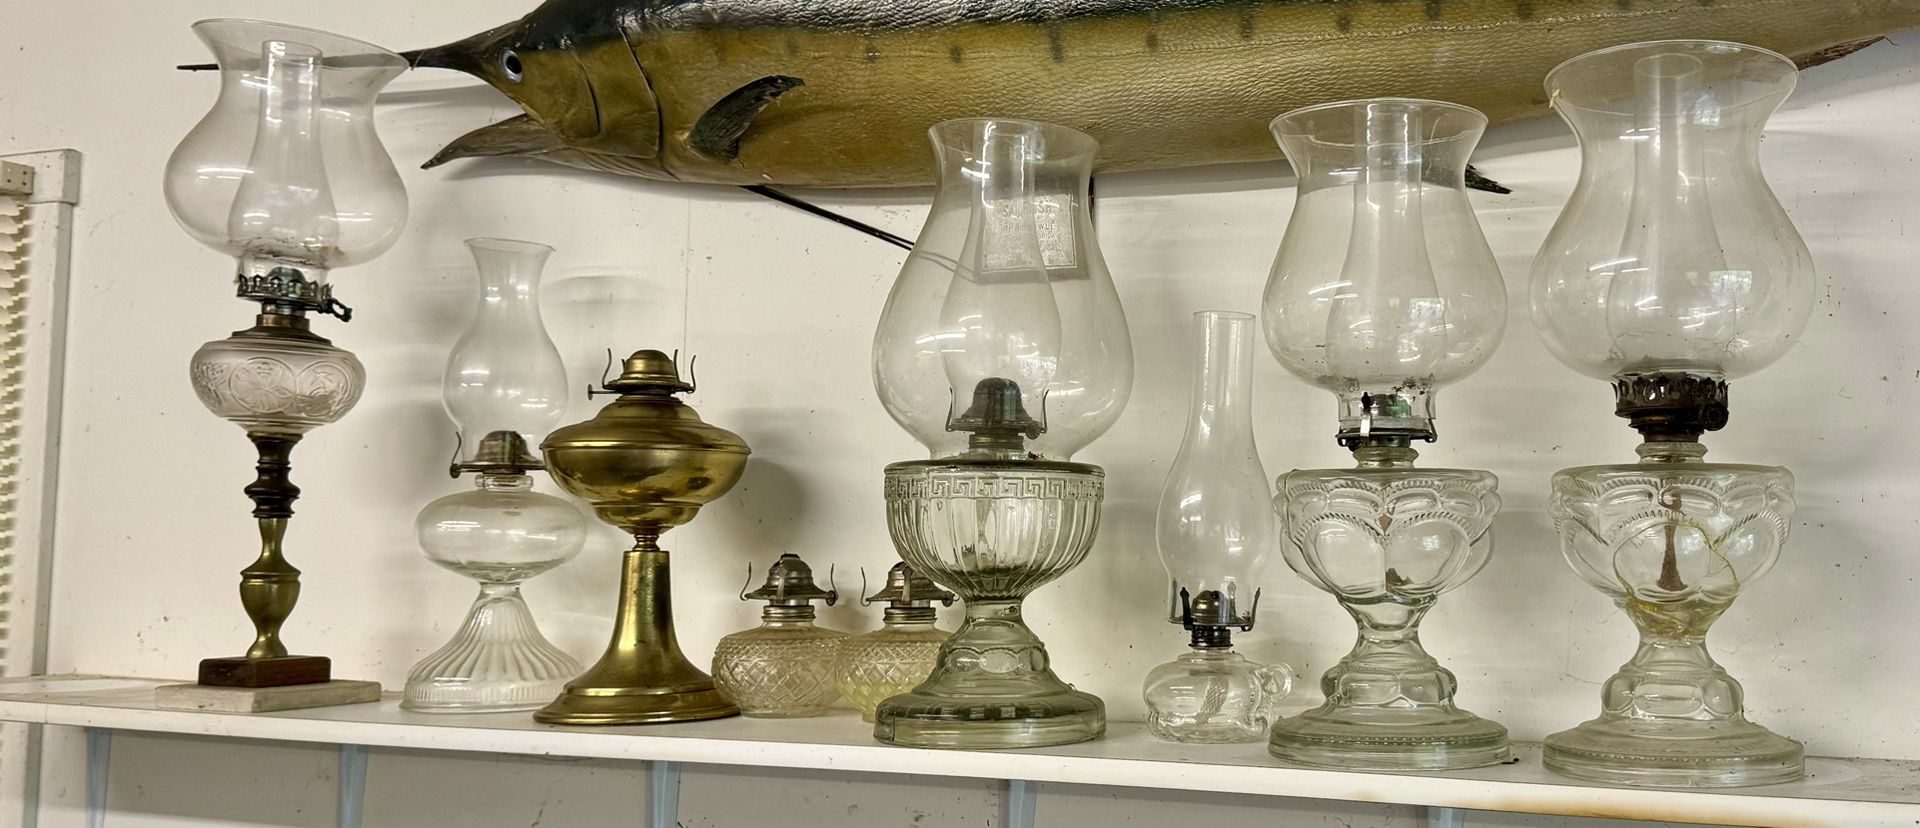 Oil Lanterns Vintage Glass